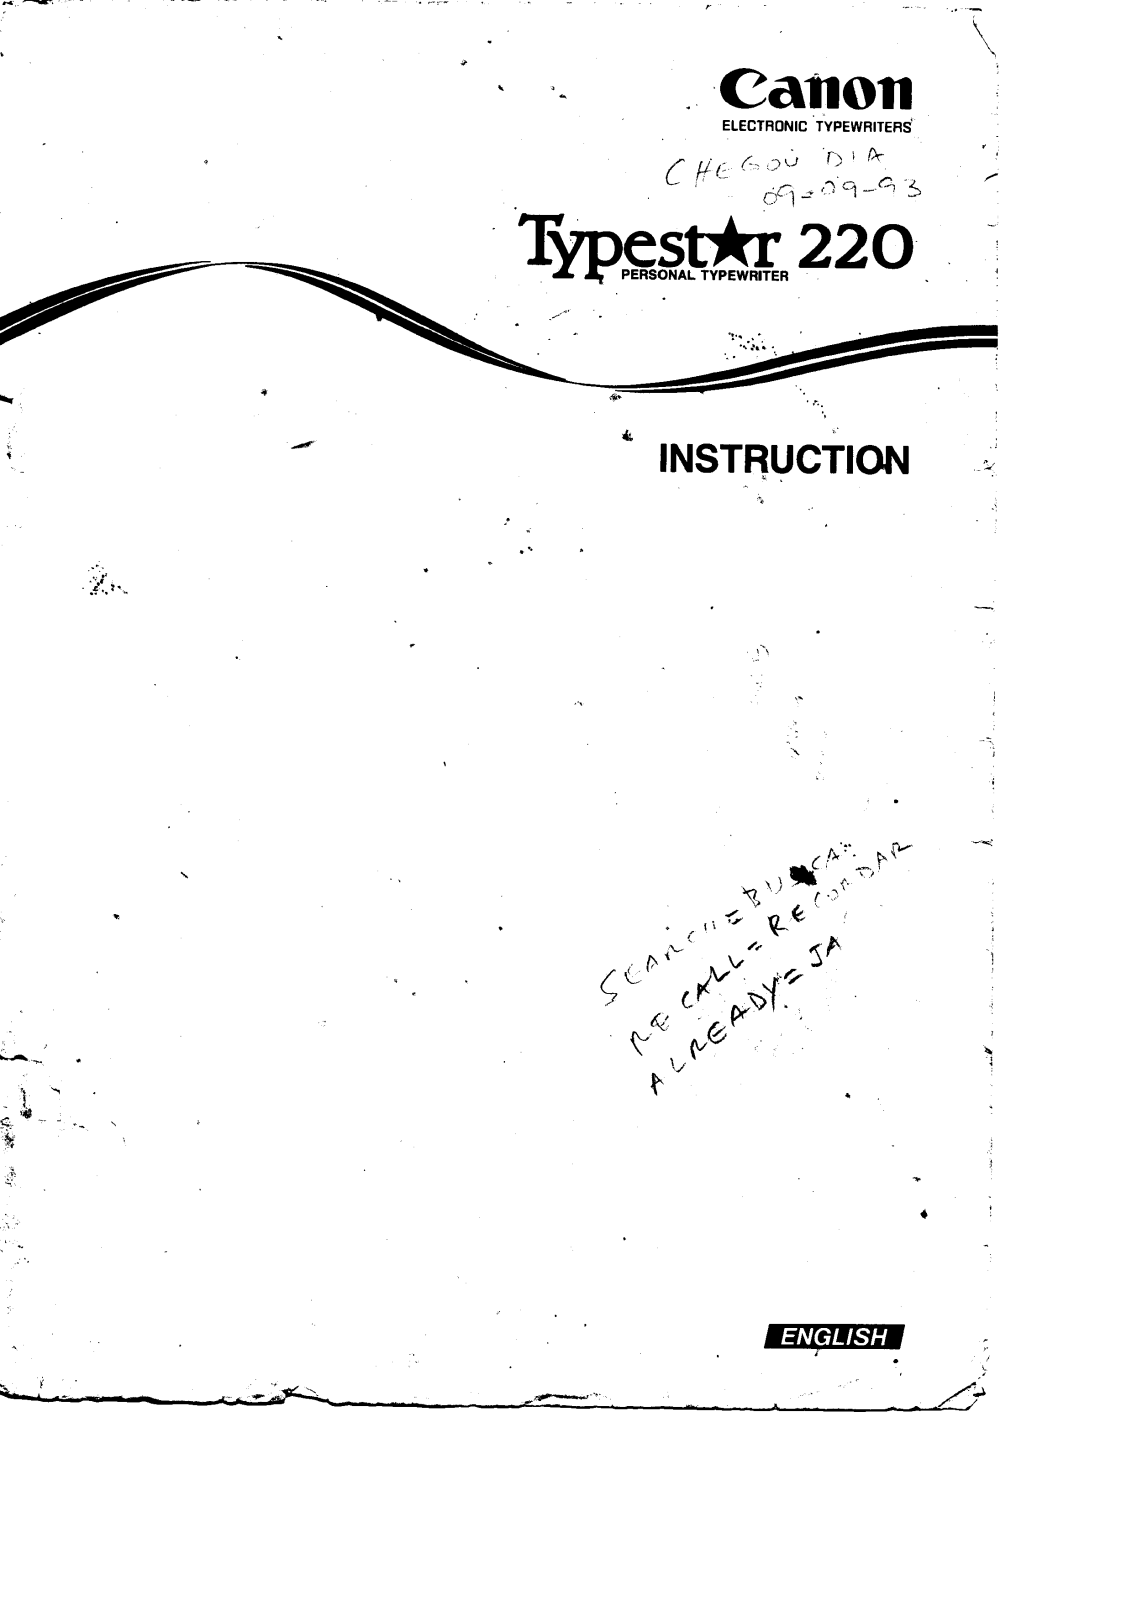 Canon Typestar 220 User Manual